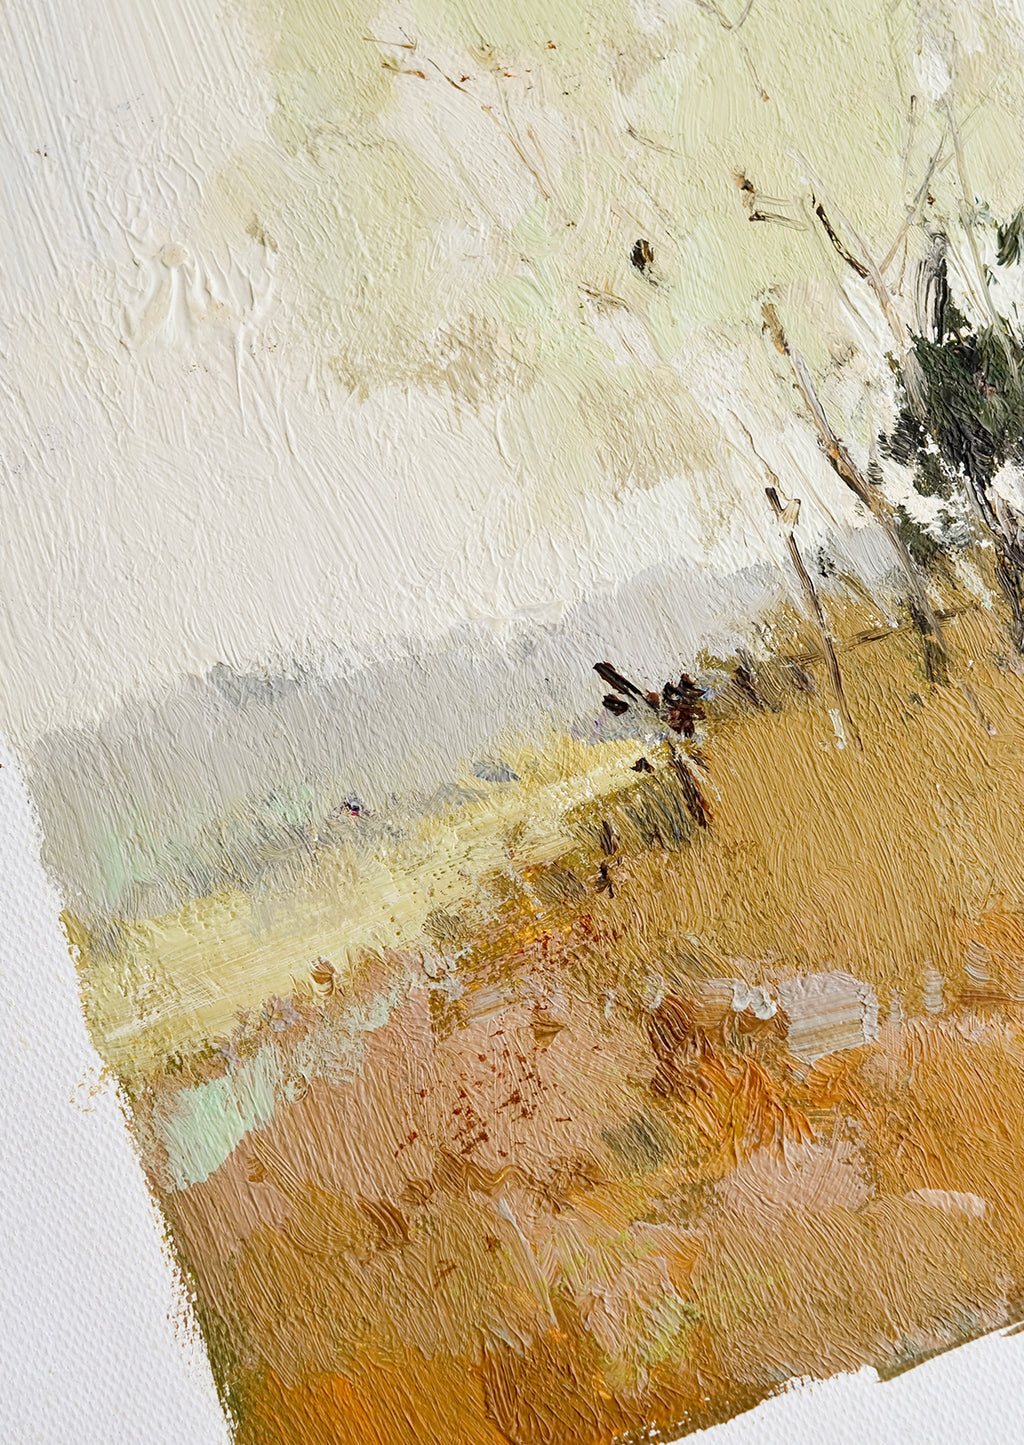 2: Raised brushstrokes on an original landscape oil painting.